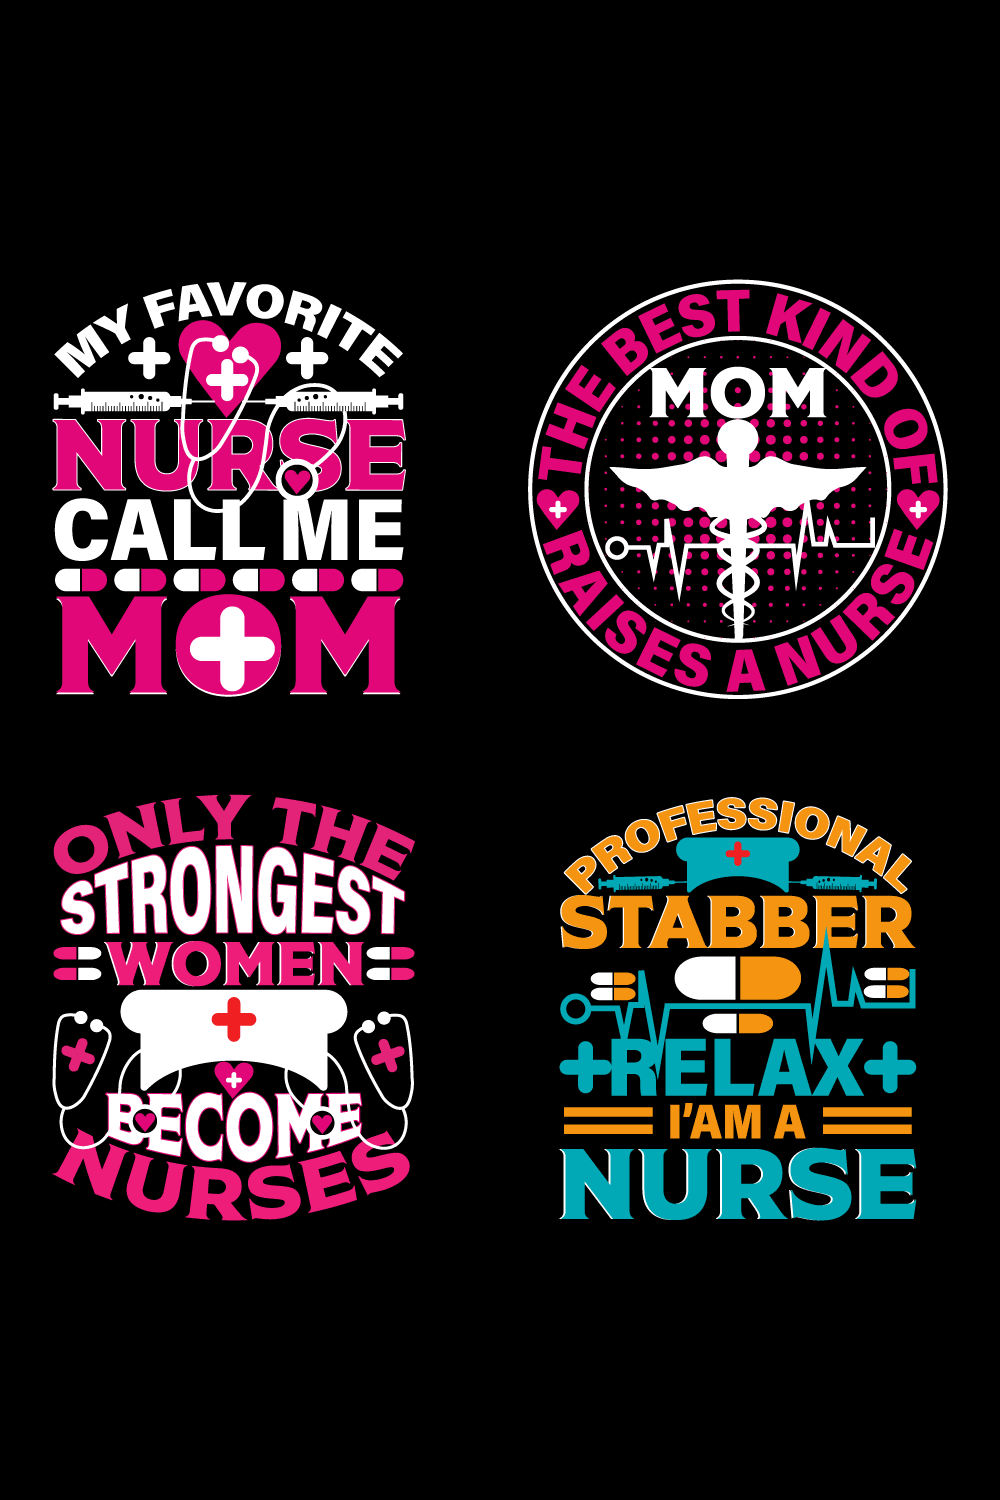 Nurse day design pinterest preview image.